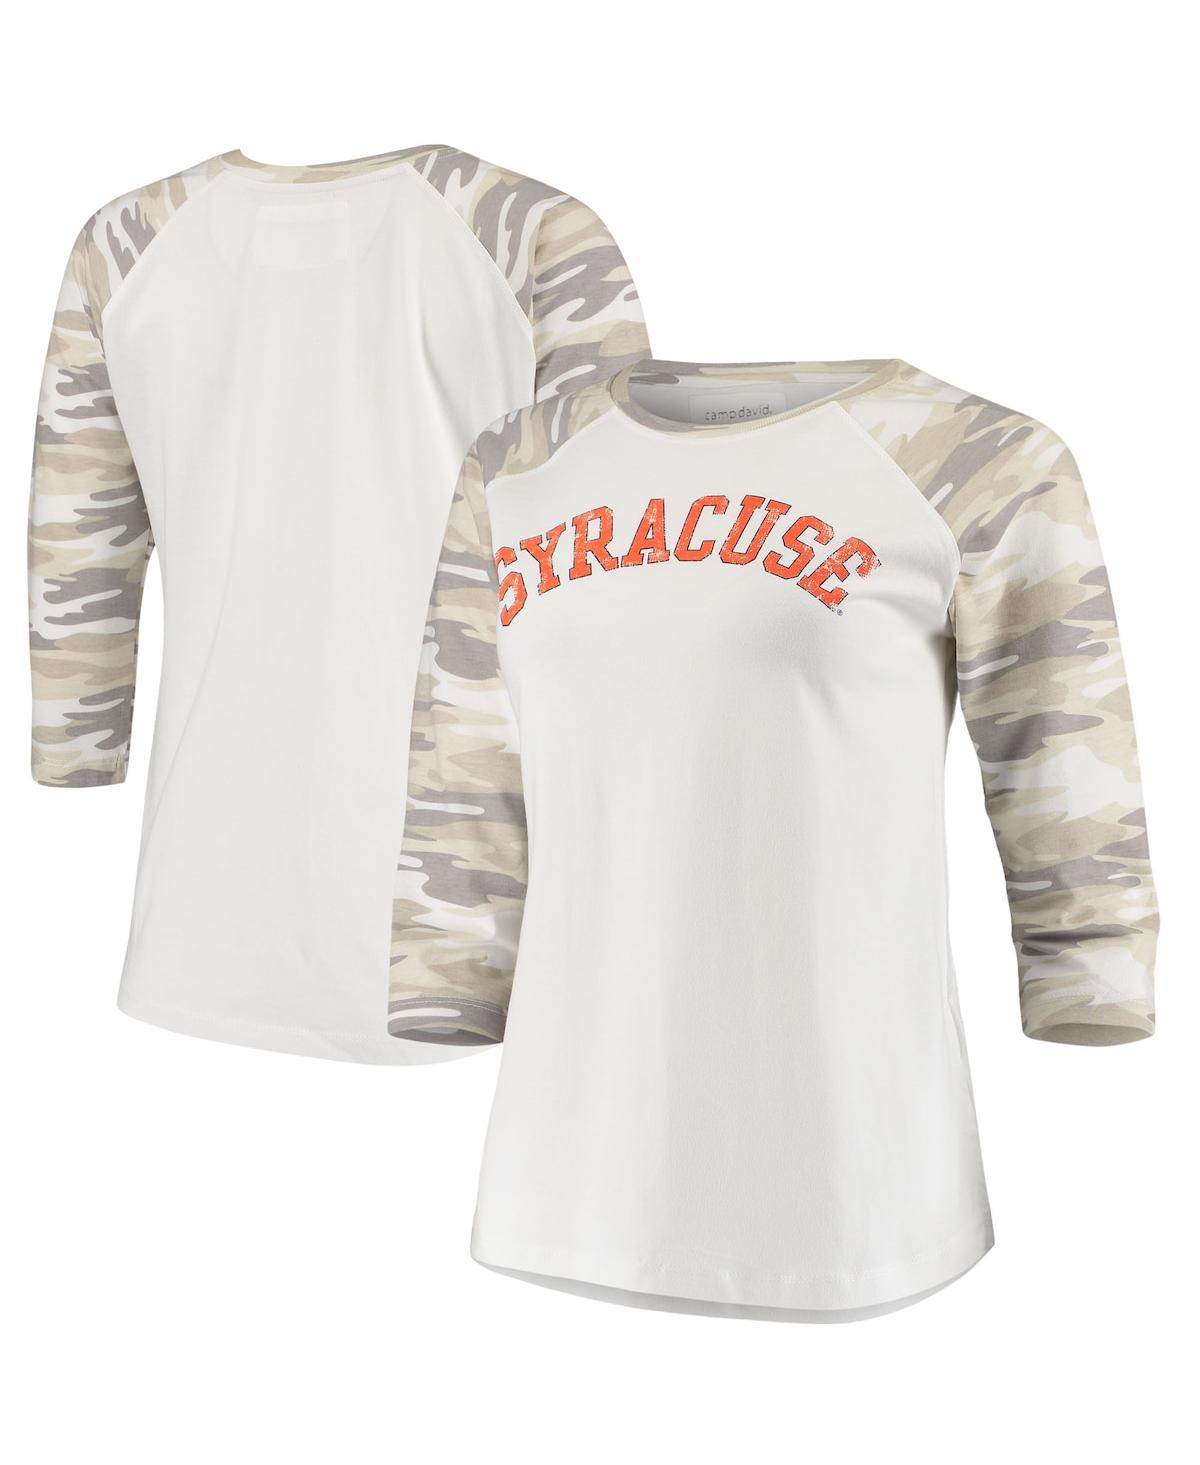 Women's White, Camo Syracuse Orange Boyfriend Baseball Raglan 3/4 Sleeve T-shirt - White, Camo